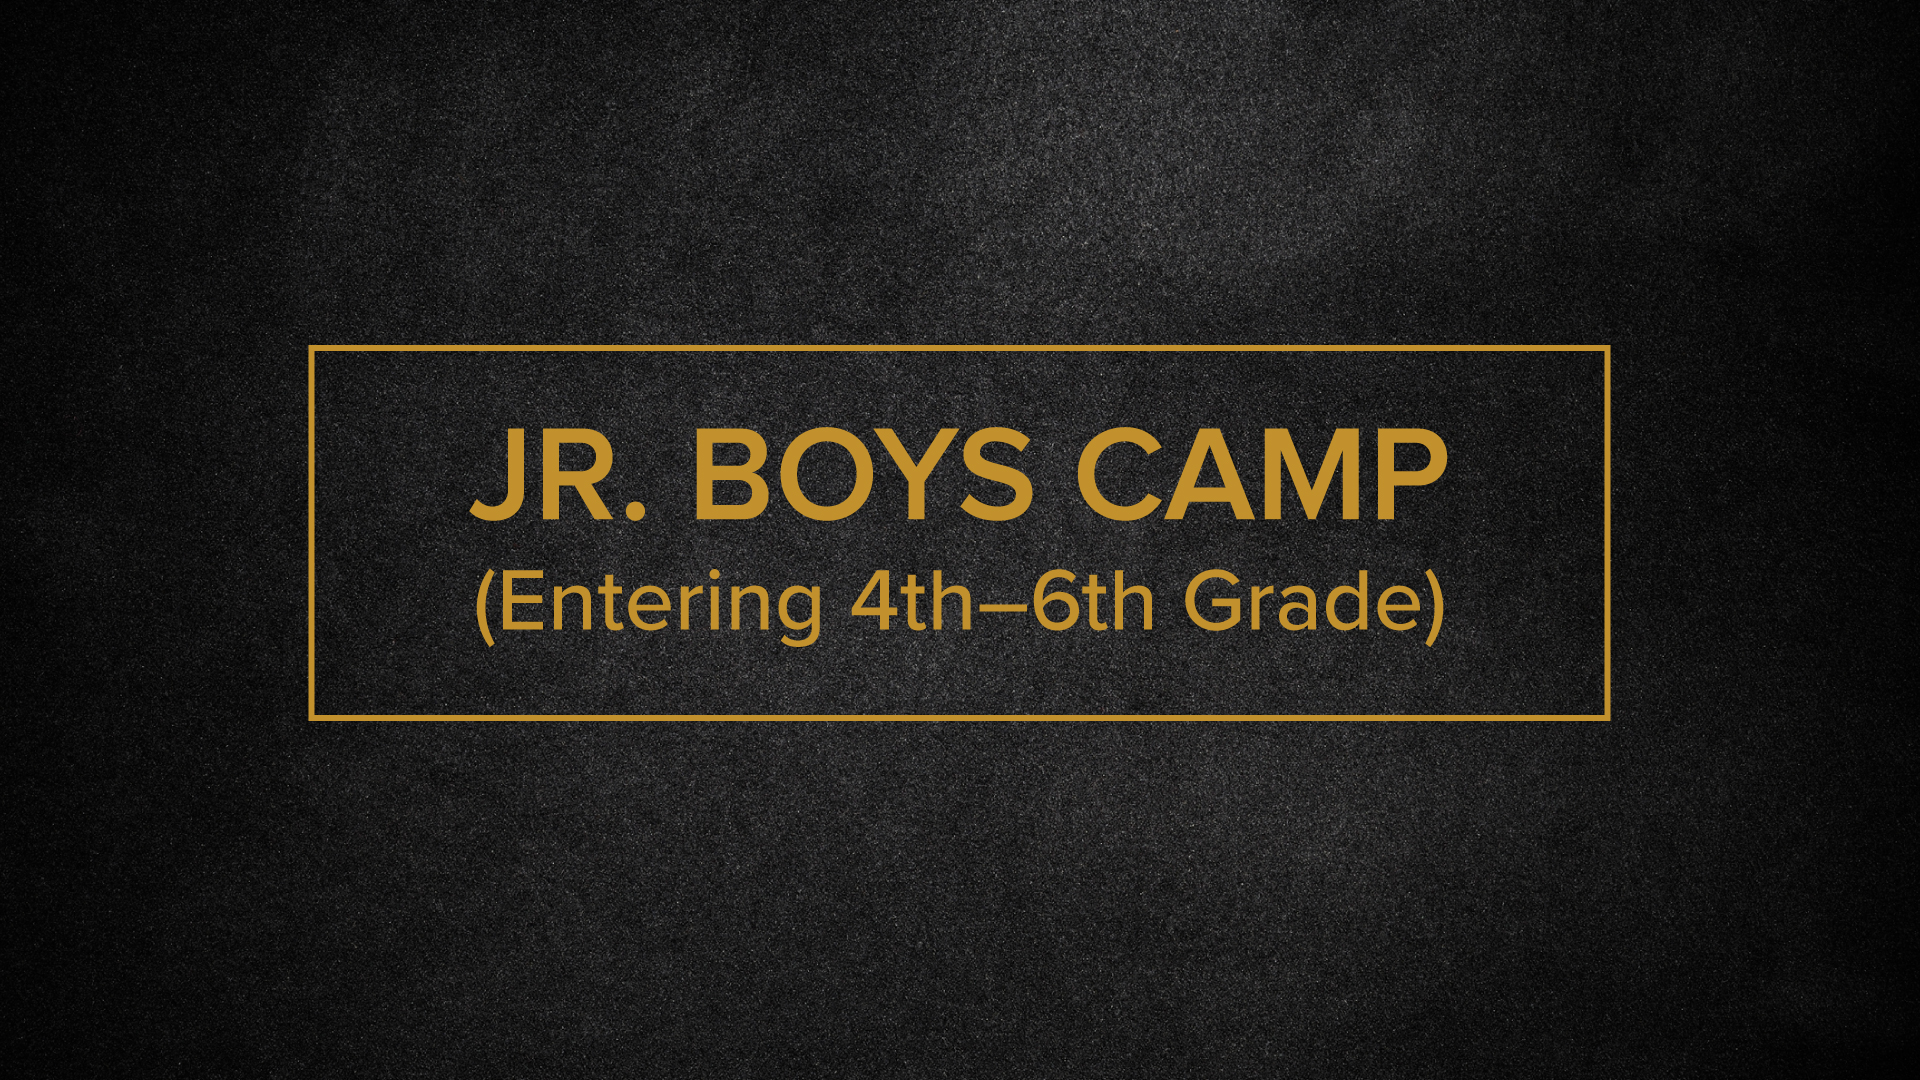 JR. BOYS CAMP